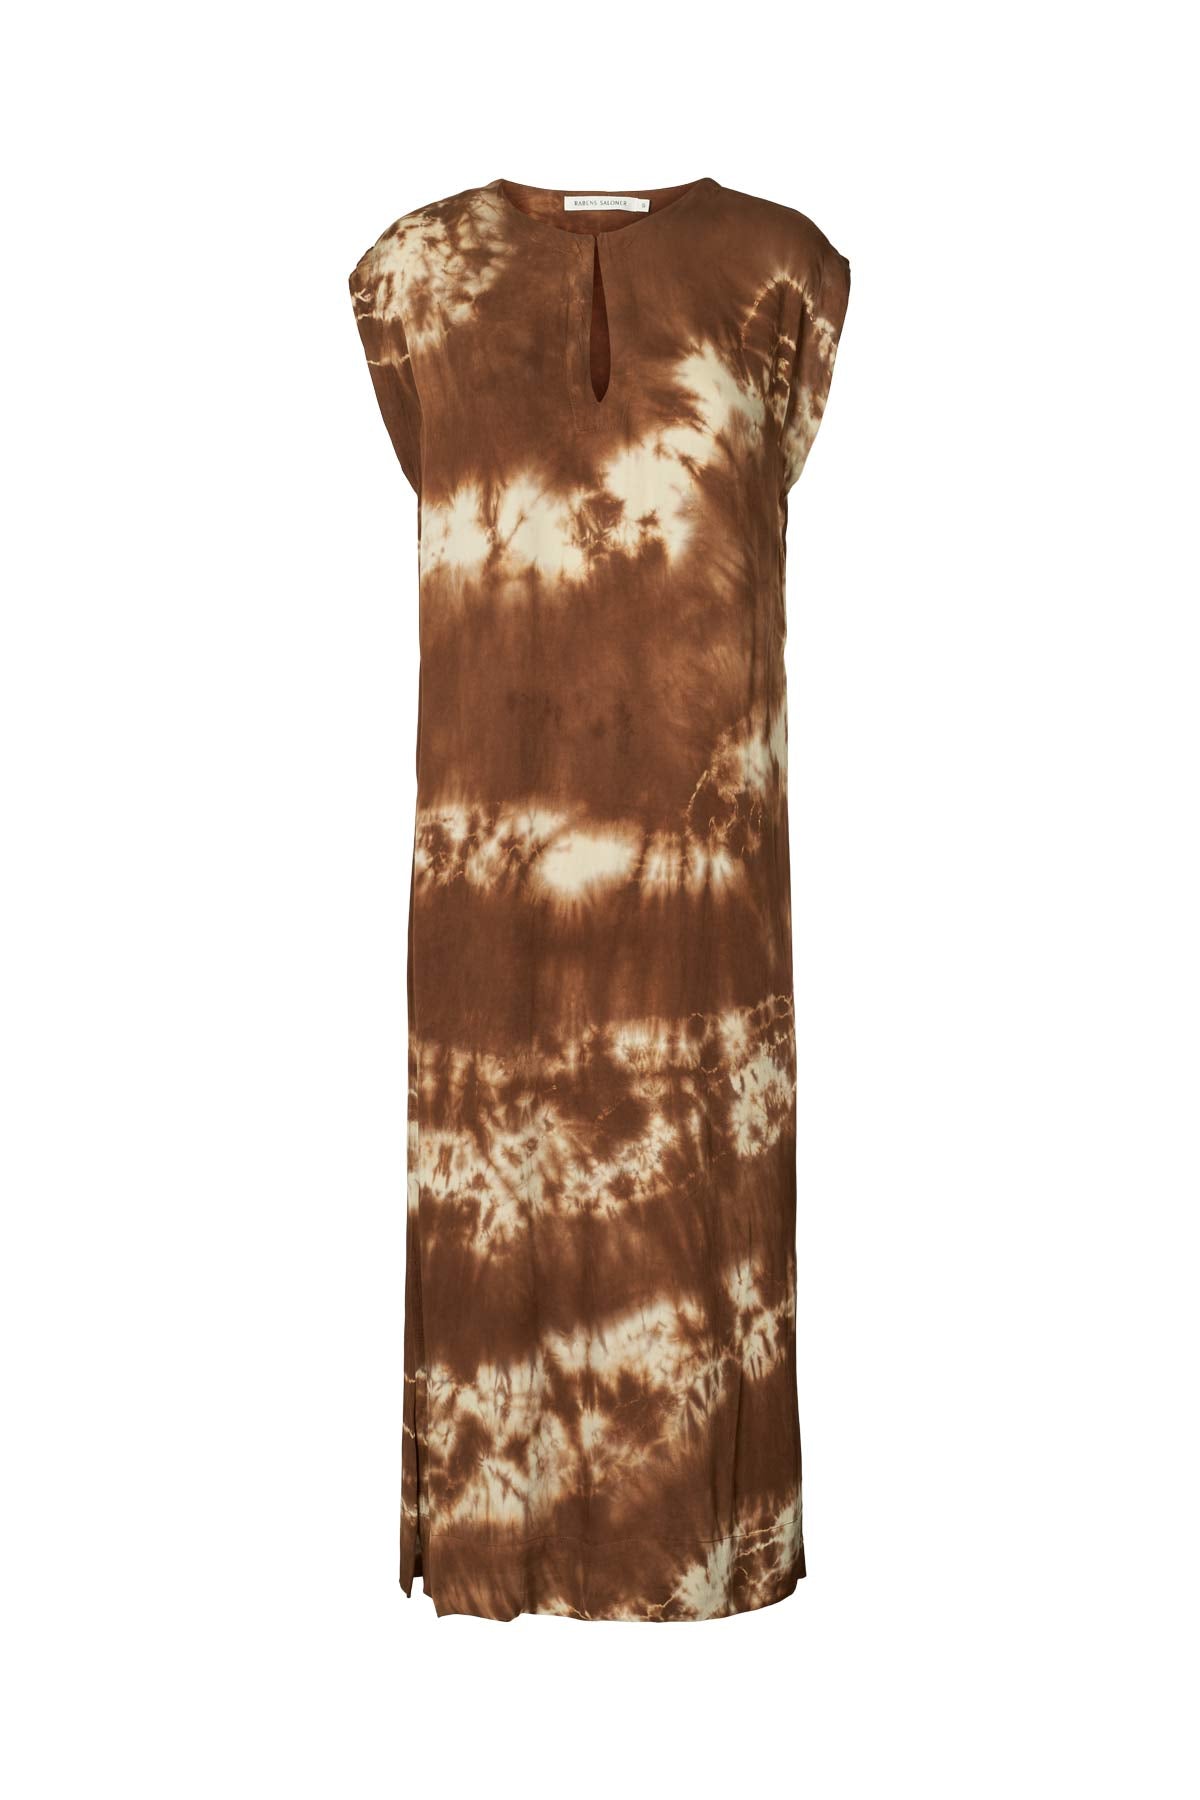 Rabens Saloner – Lecia Nebula lang kjole – brun – Size (l)